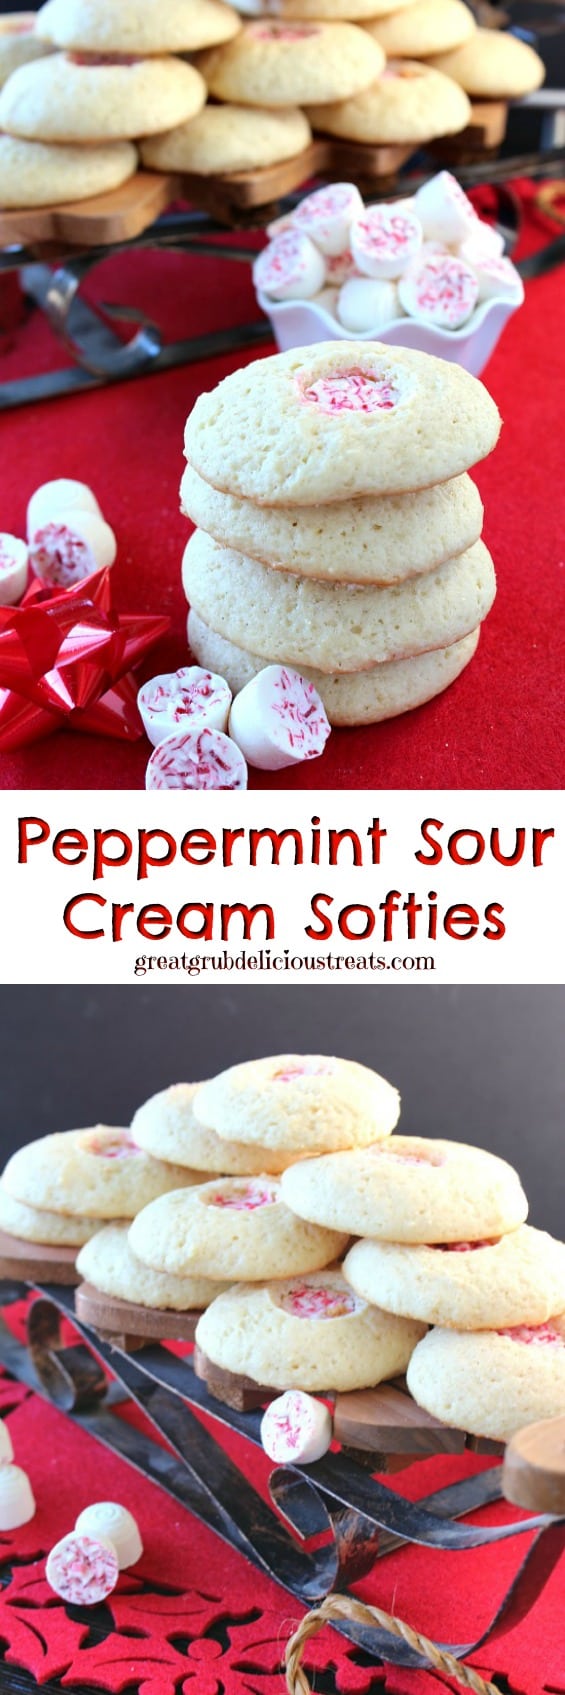 Peppermint Sour Cream Softies